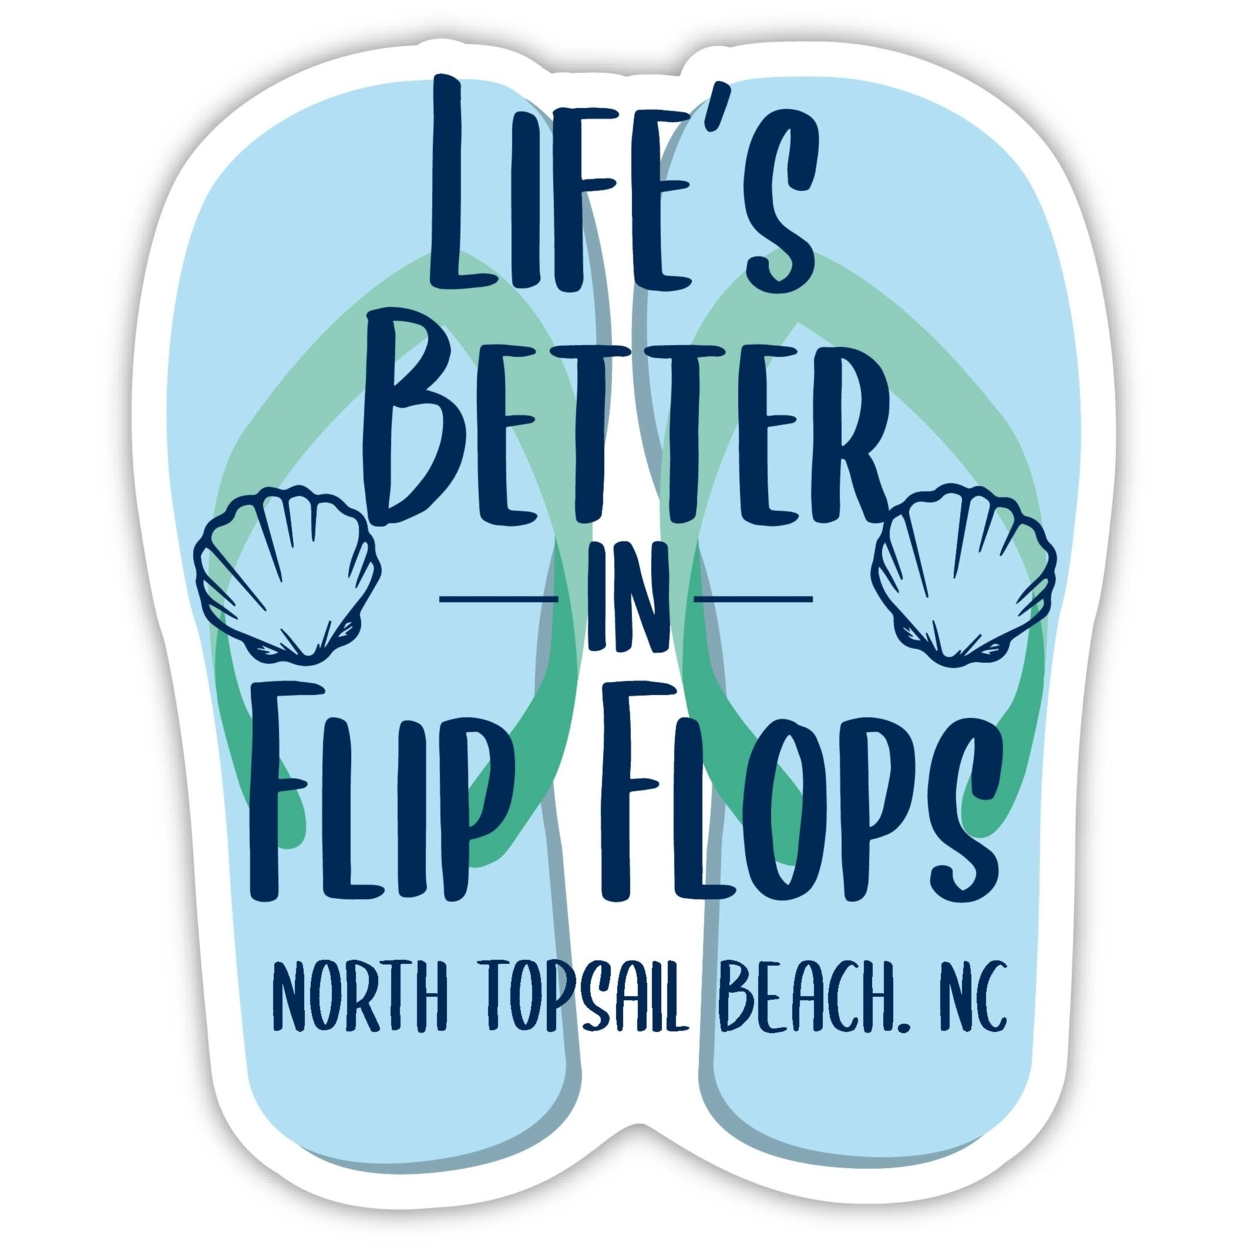 North Topsail Beach North Carolina Souvenir 4 Inch Vinyl Decal Sticker Flip Flop Design